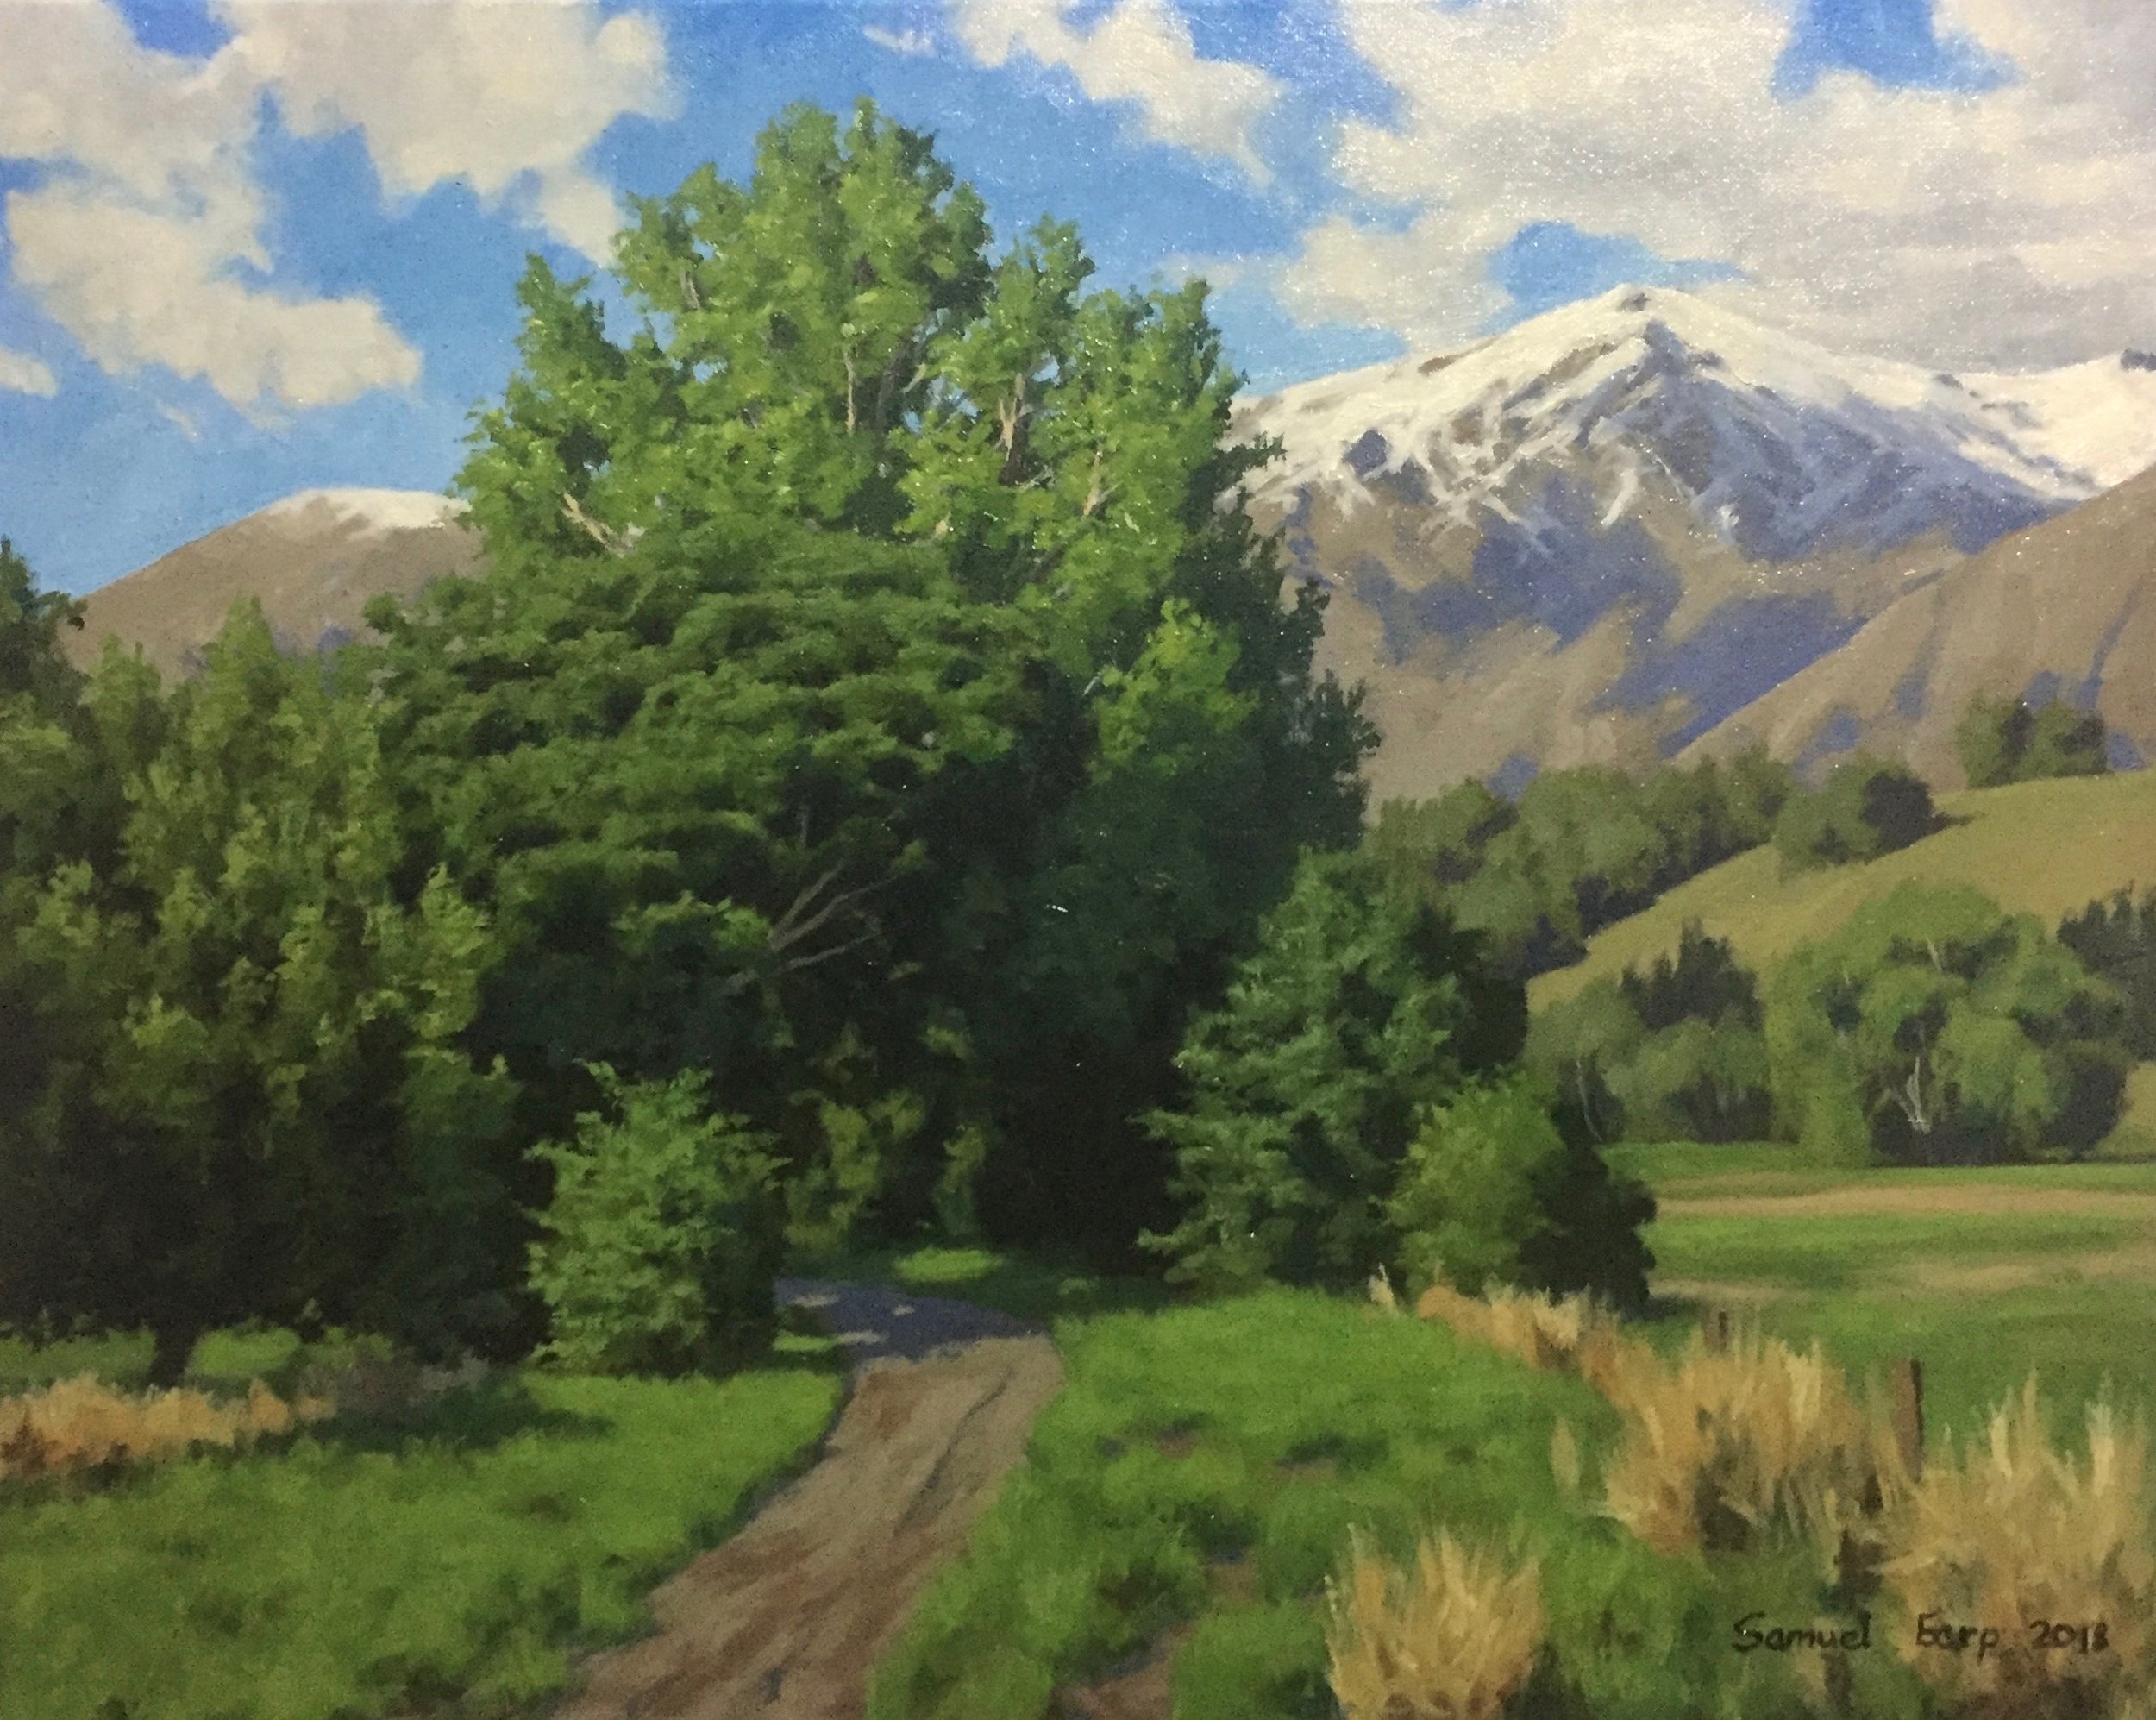 Poplar Trees and the Remarkables Mountains - oil painting - landscape - Samuel Earp - New Zealand landscape artist.jpg